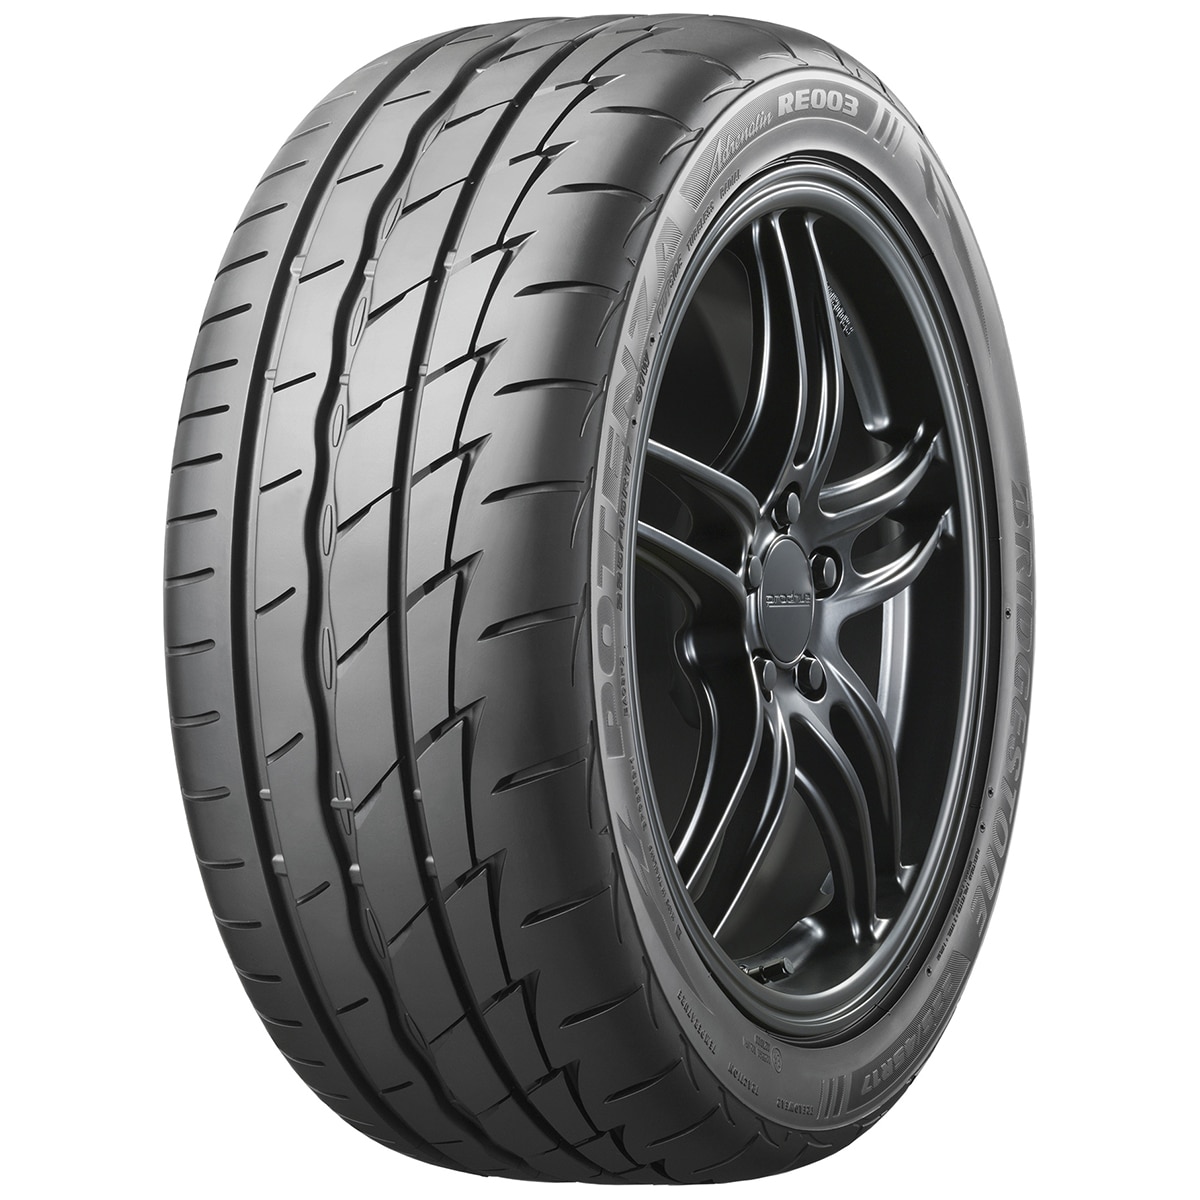 225/45R17 94W XL BS RE003 - Tyre